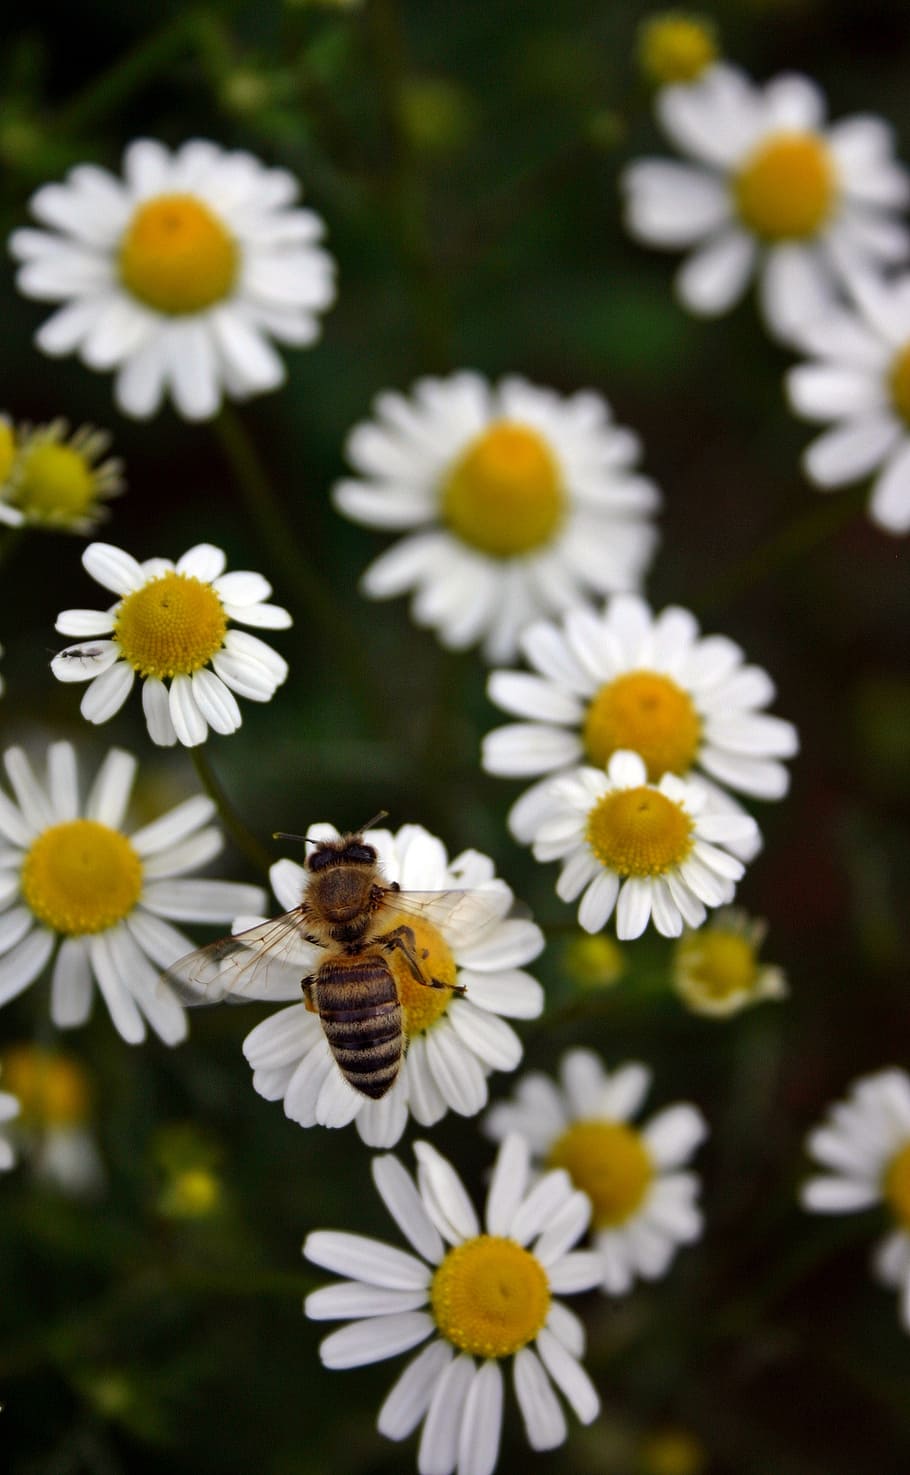 abeja, miel de abeja, polen, insecto, cerrar, flor, florecer, manzanilla, néctar, abeja europea